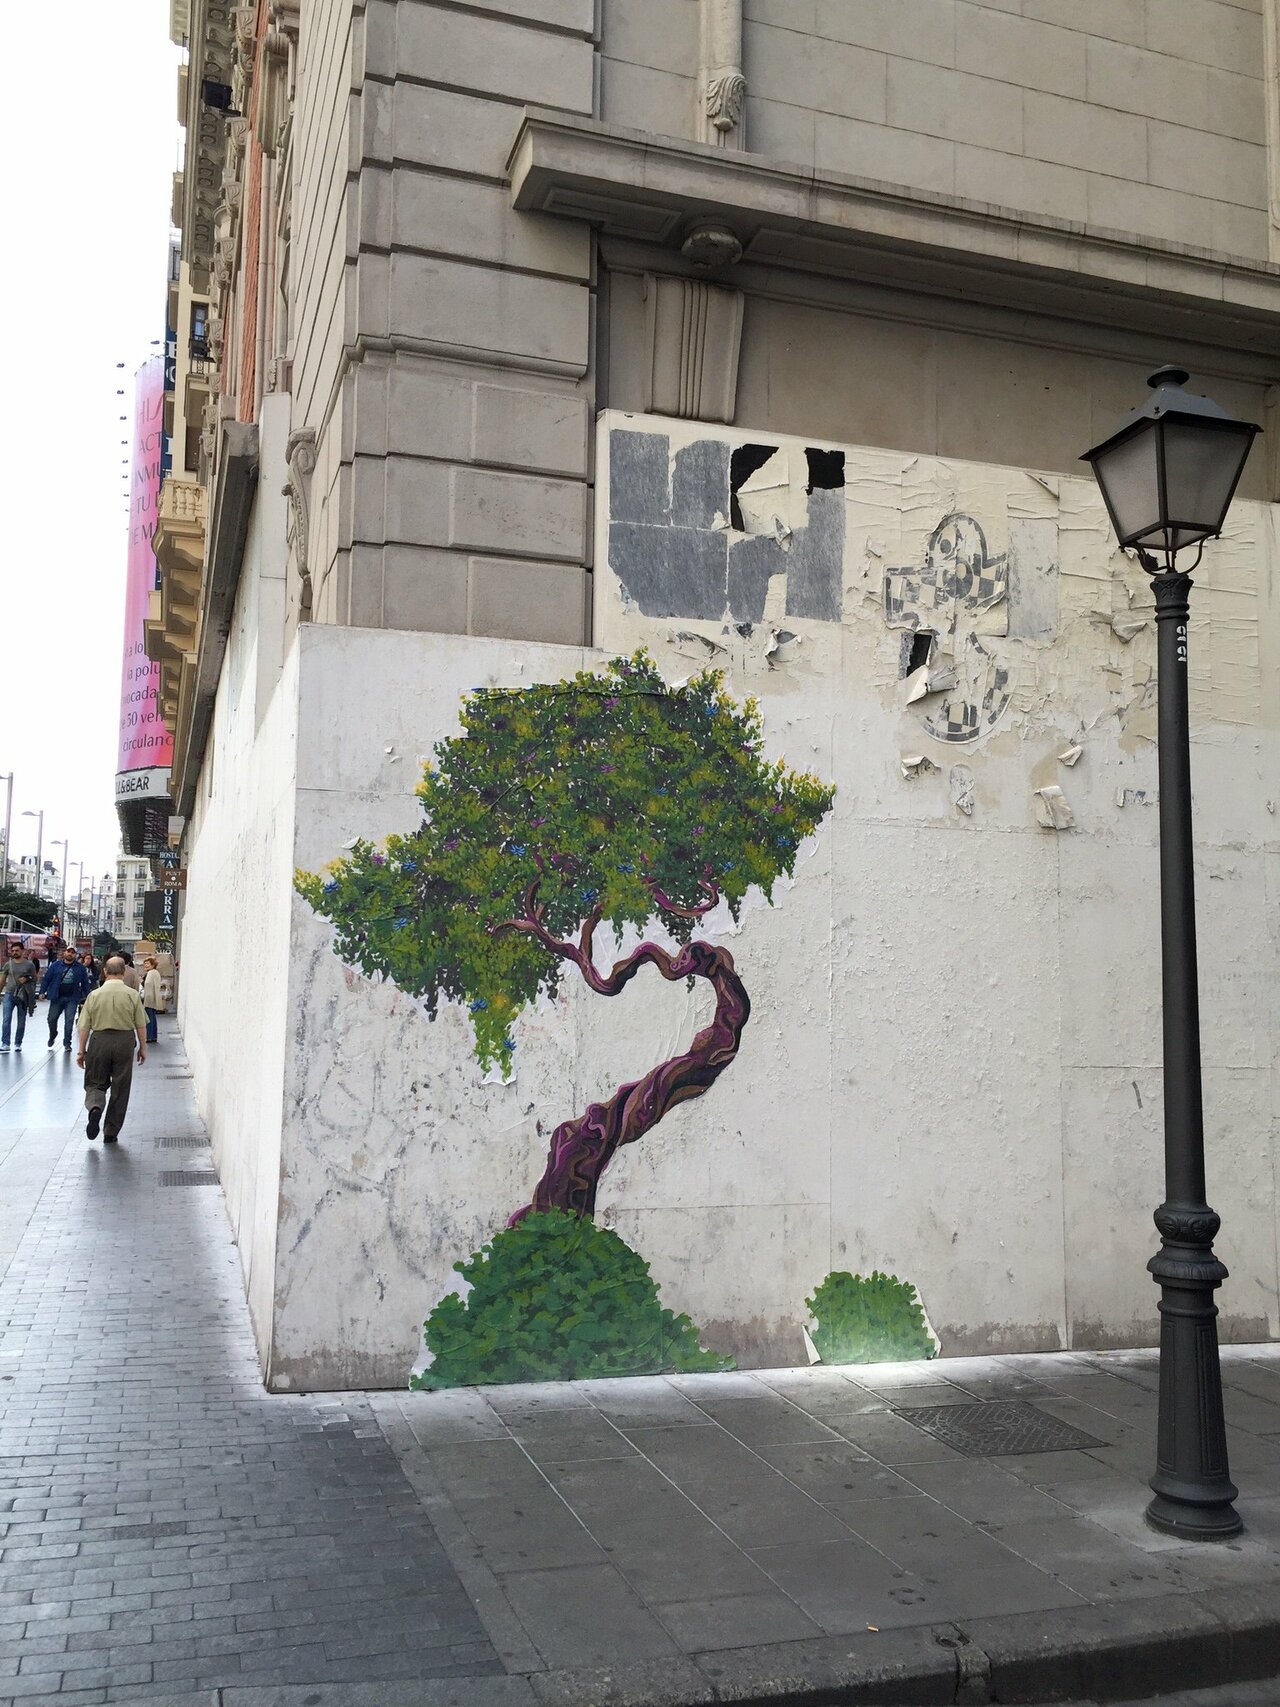 #Graffiti de hoy: << Caprichoso >> #LaGranVia #Madrid #España #StreetArt #UrbanArt #ArteUrbano https://t.co/zNYd6taO2x